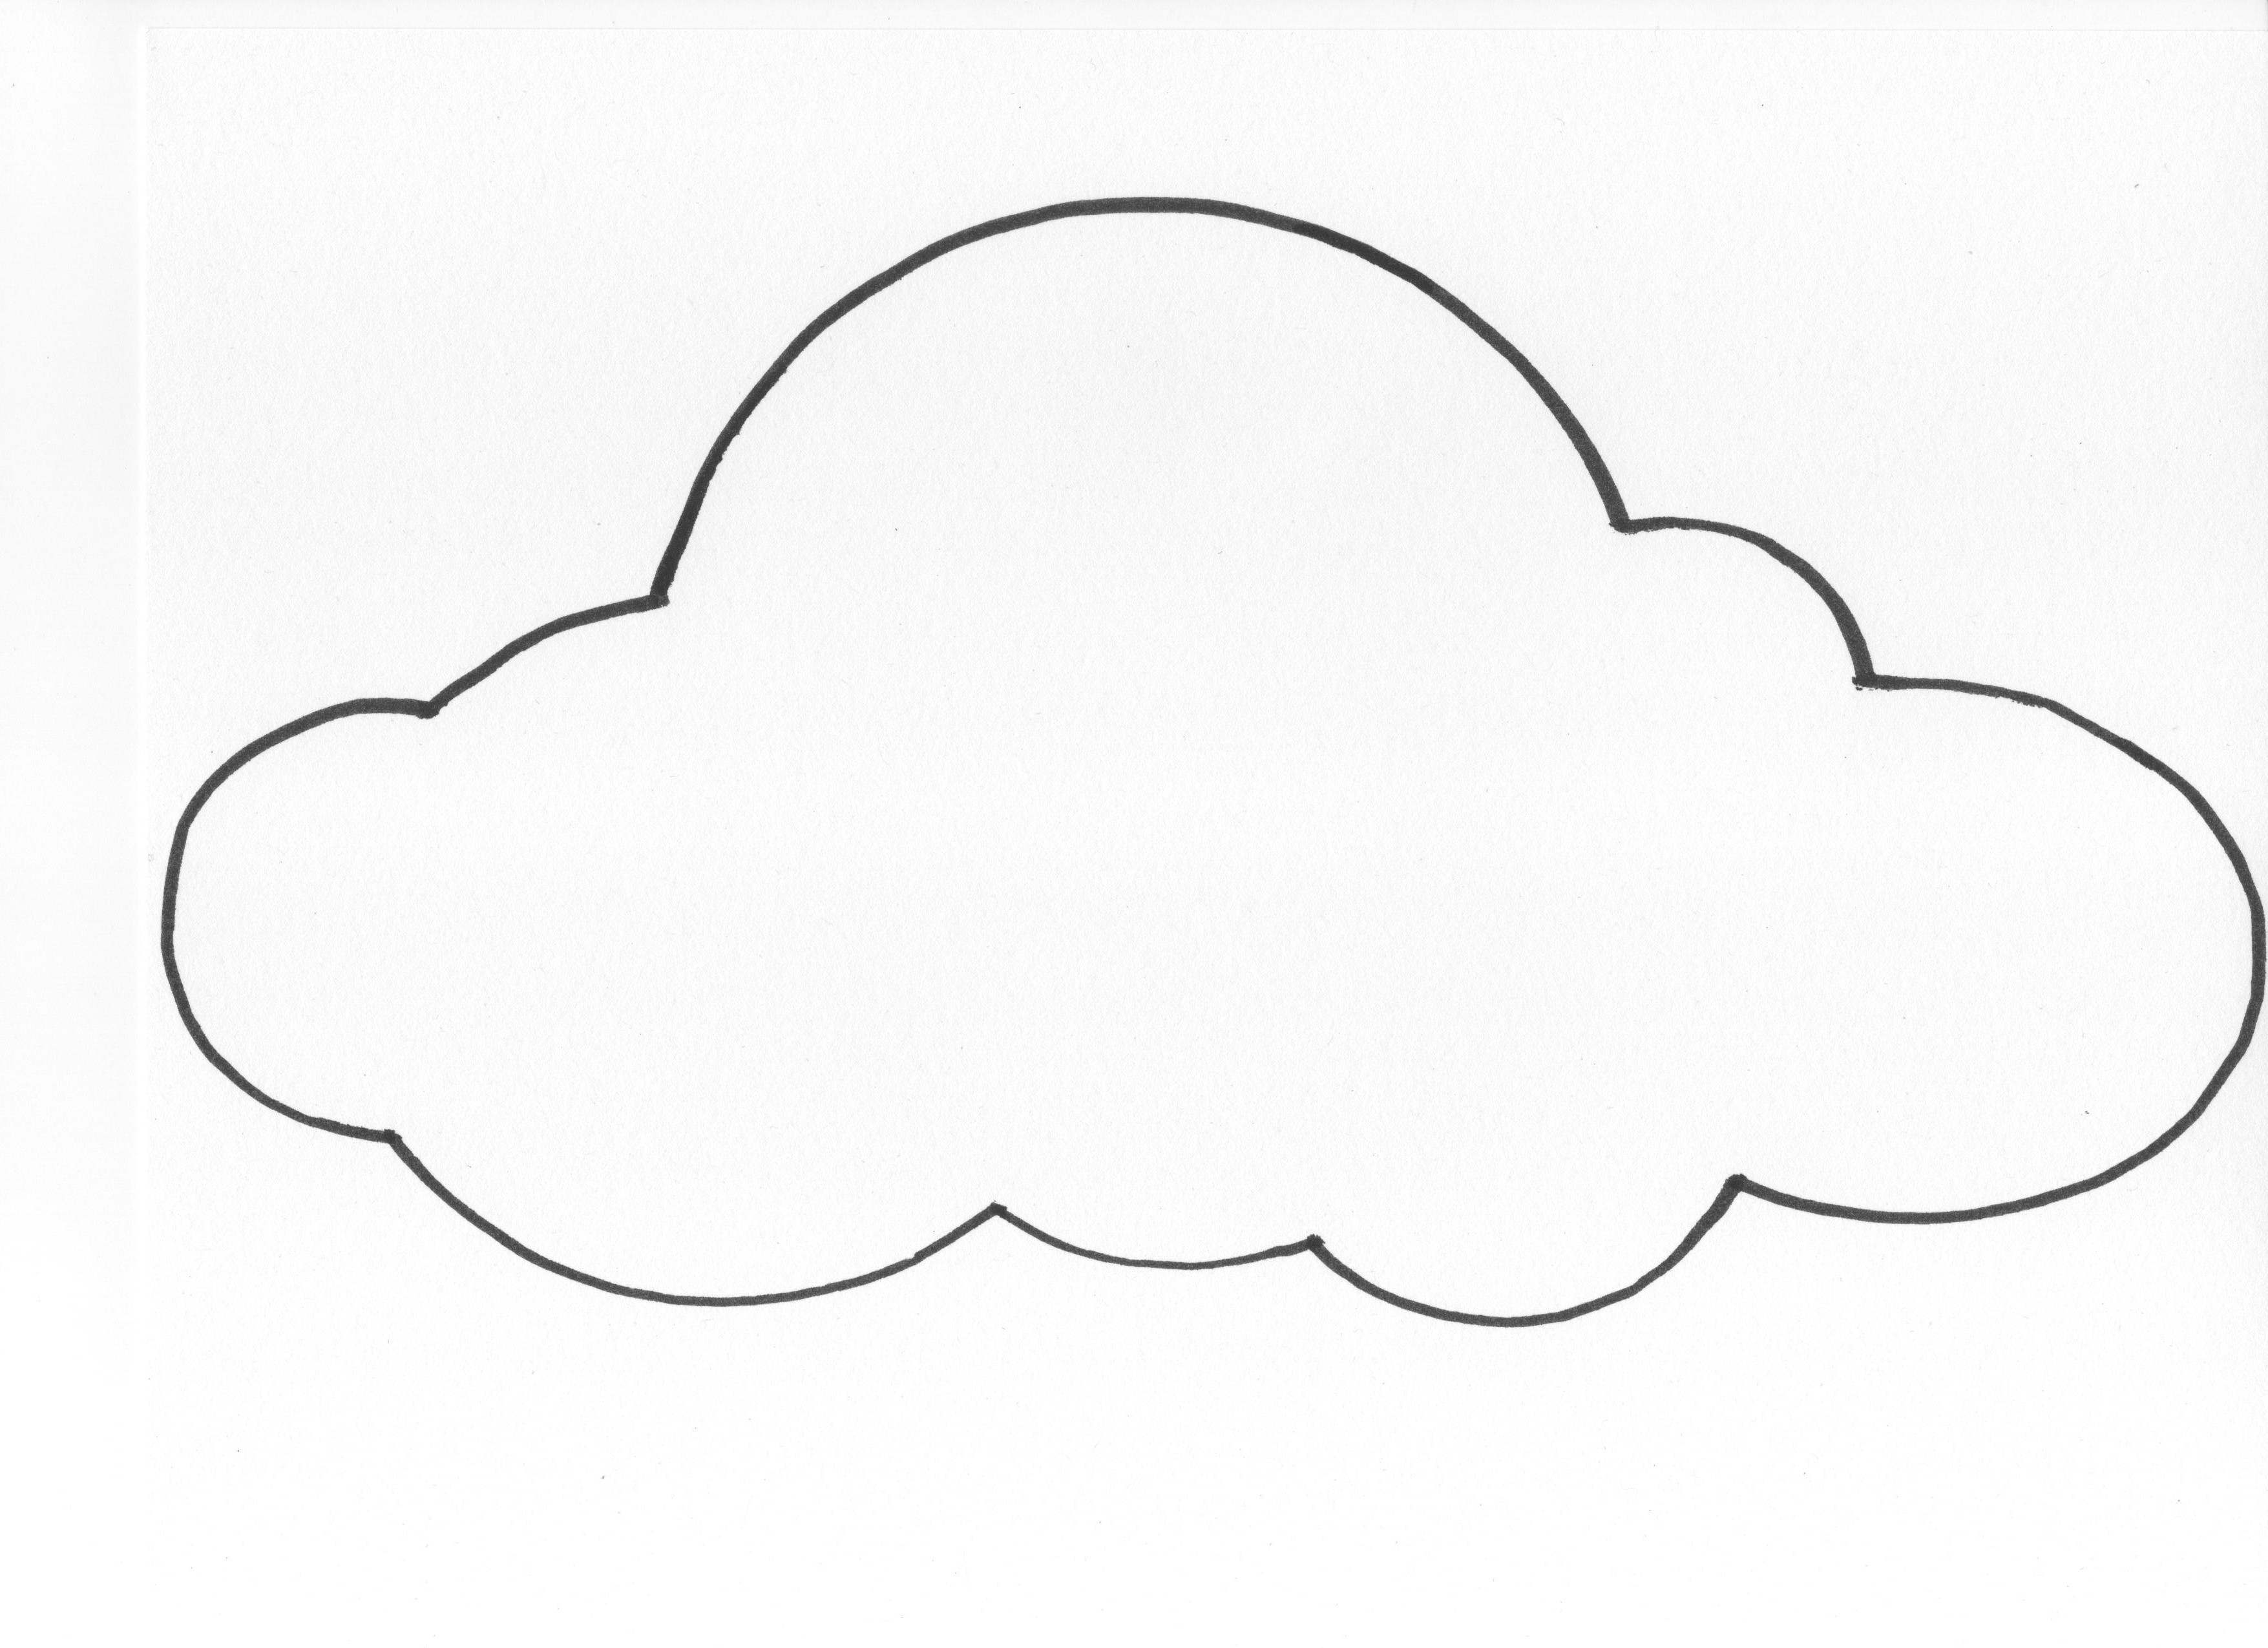 Printable Cloud Template